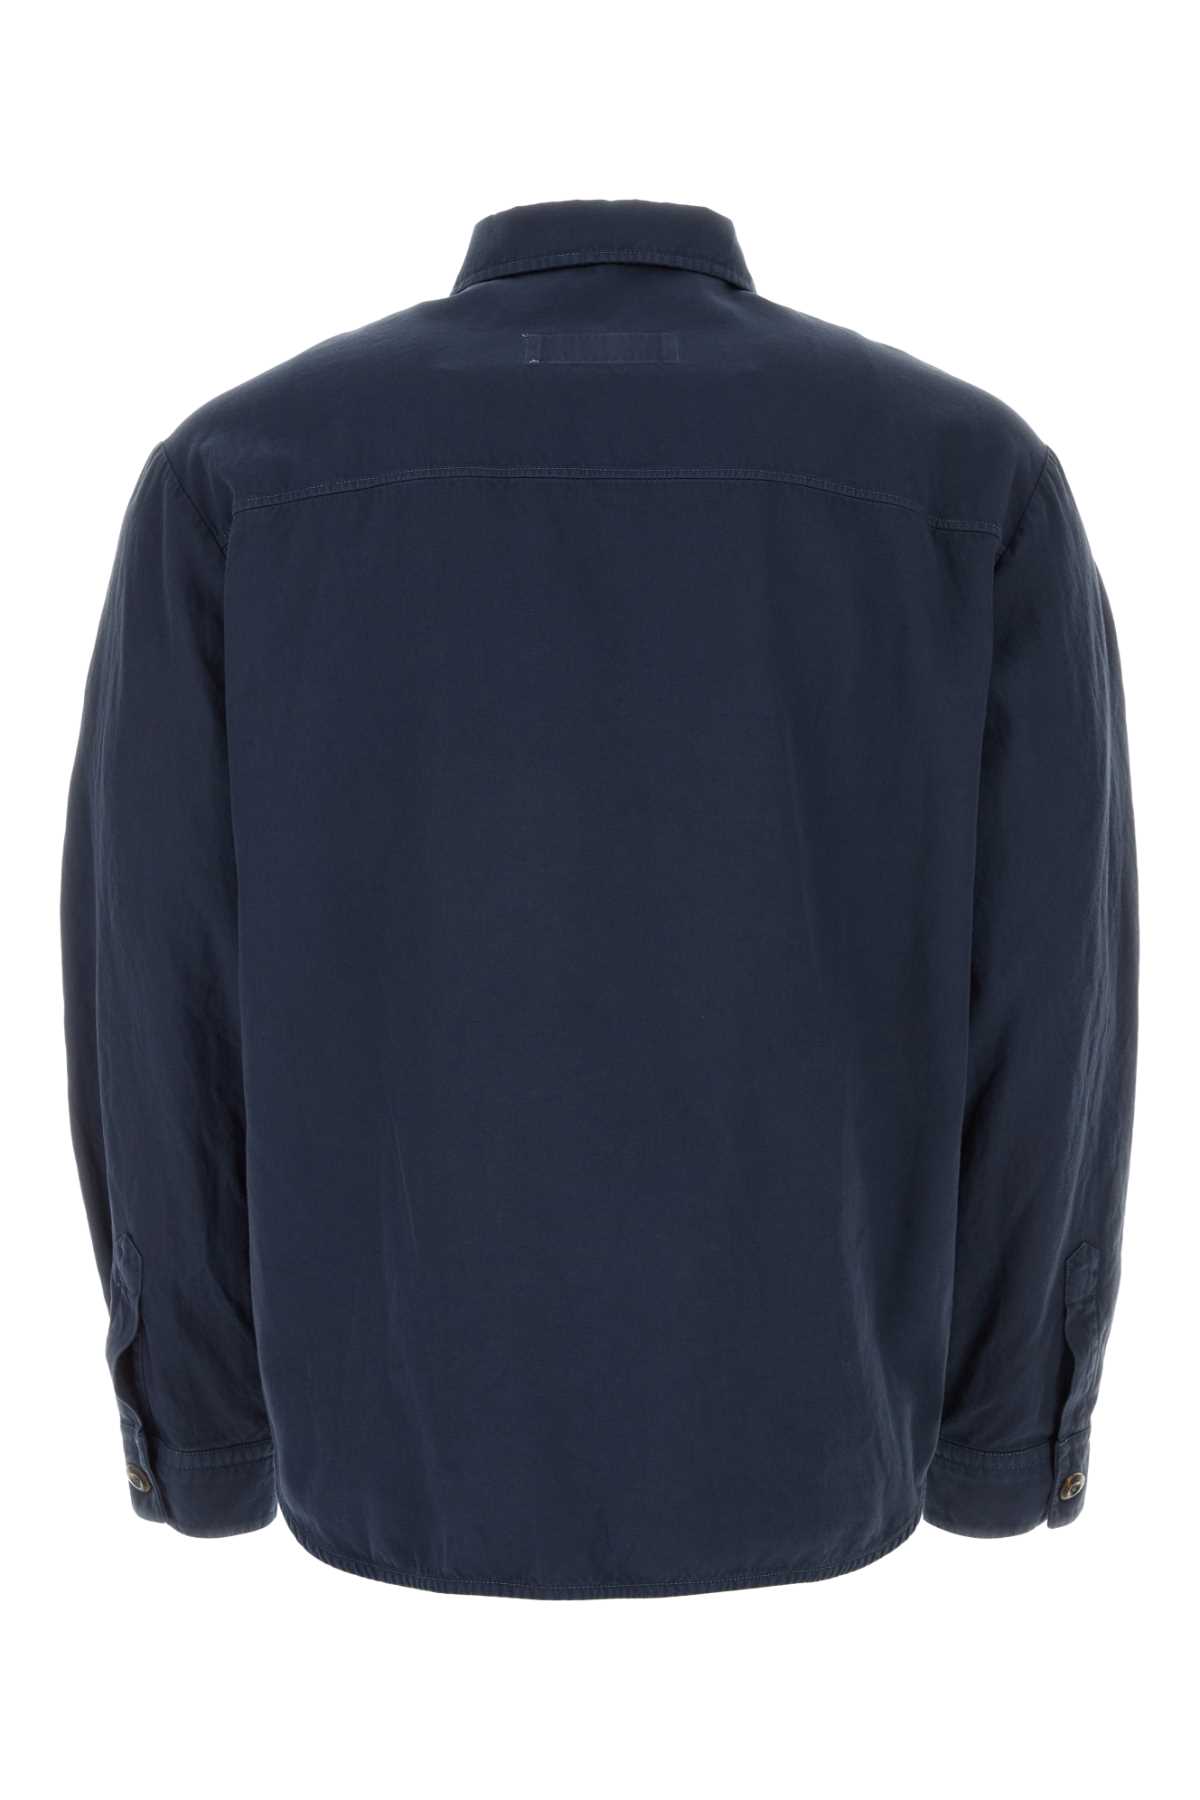 Fay Navy Blue Cotton Blend Shirt In U809